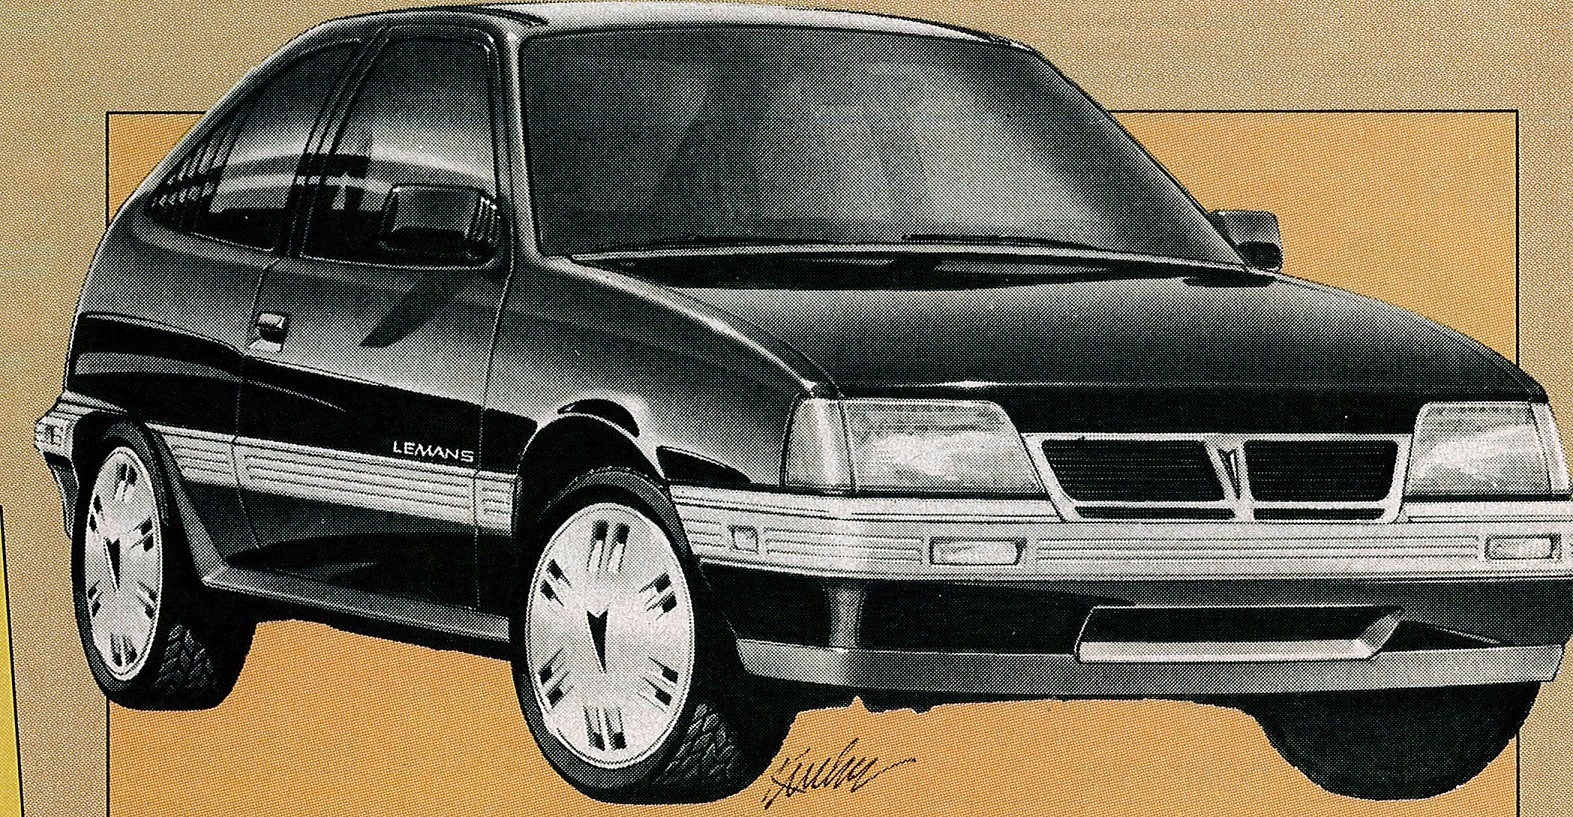 1988 Pontiac LeMans GSE Daewoo Classic Article P81 